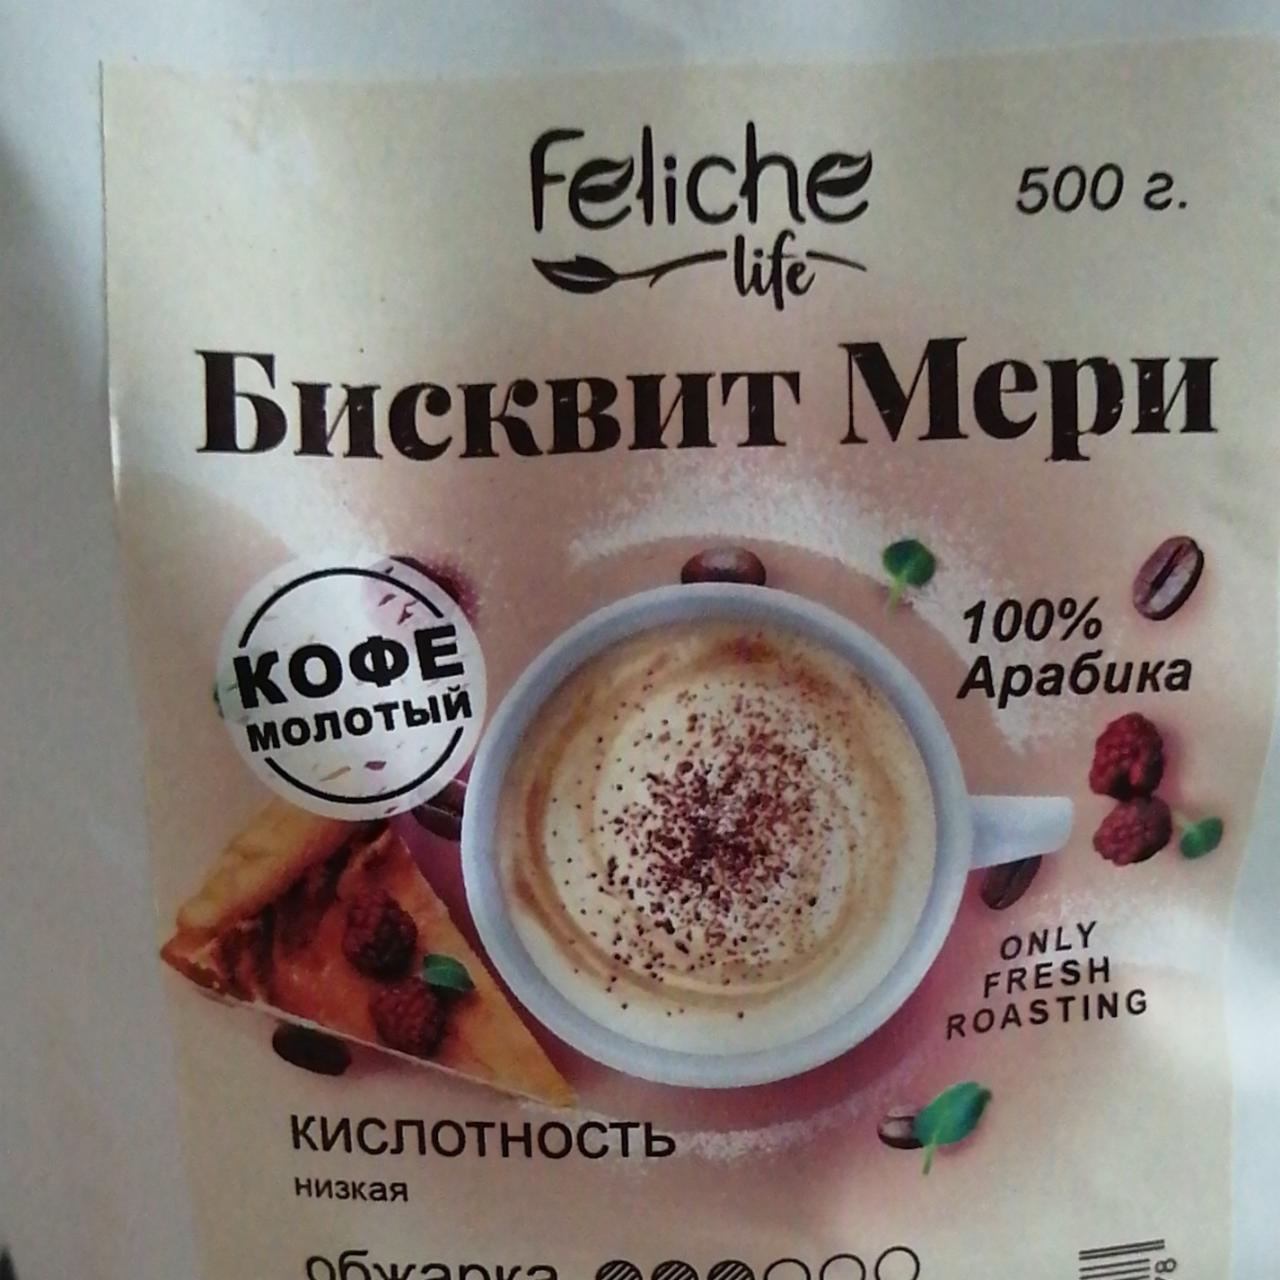 Фото - Кофе молотый Бисквит мери Feliche life